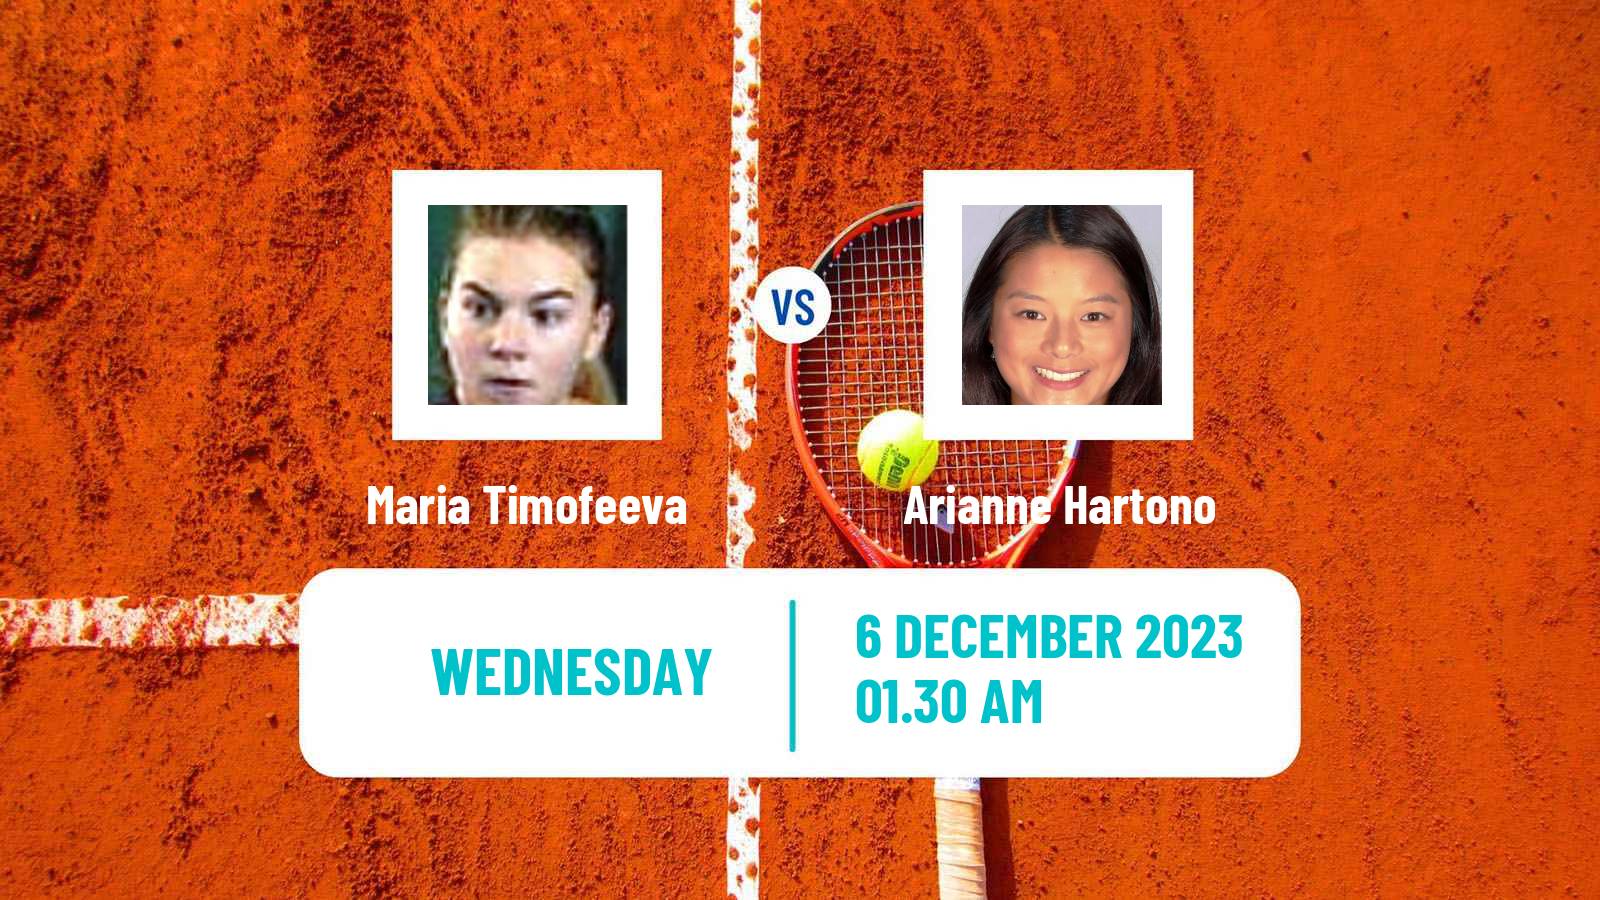 Tennis ITF W100 Dubai Women Maria Timofeeva - Arianne Hartono